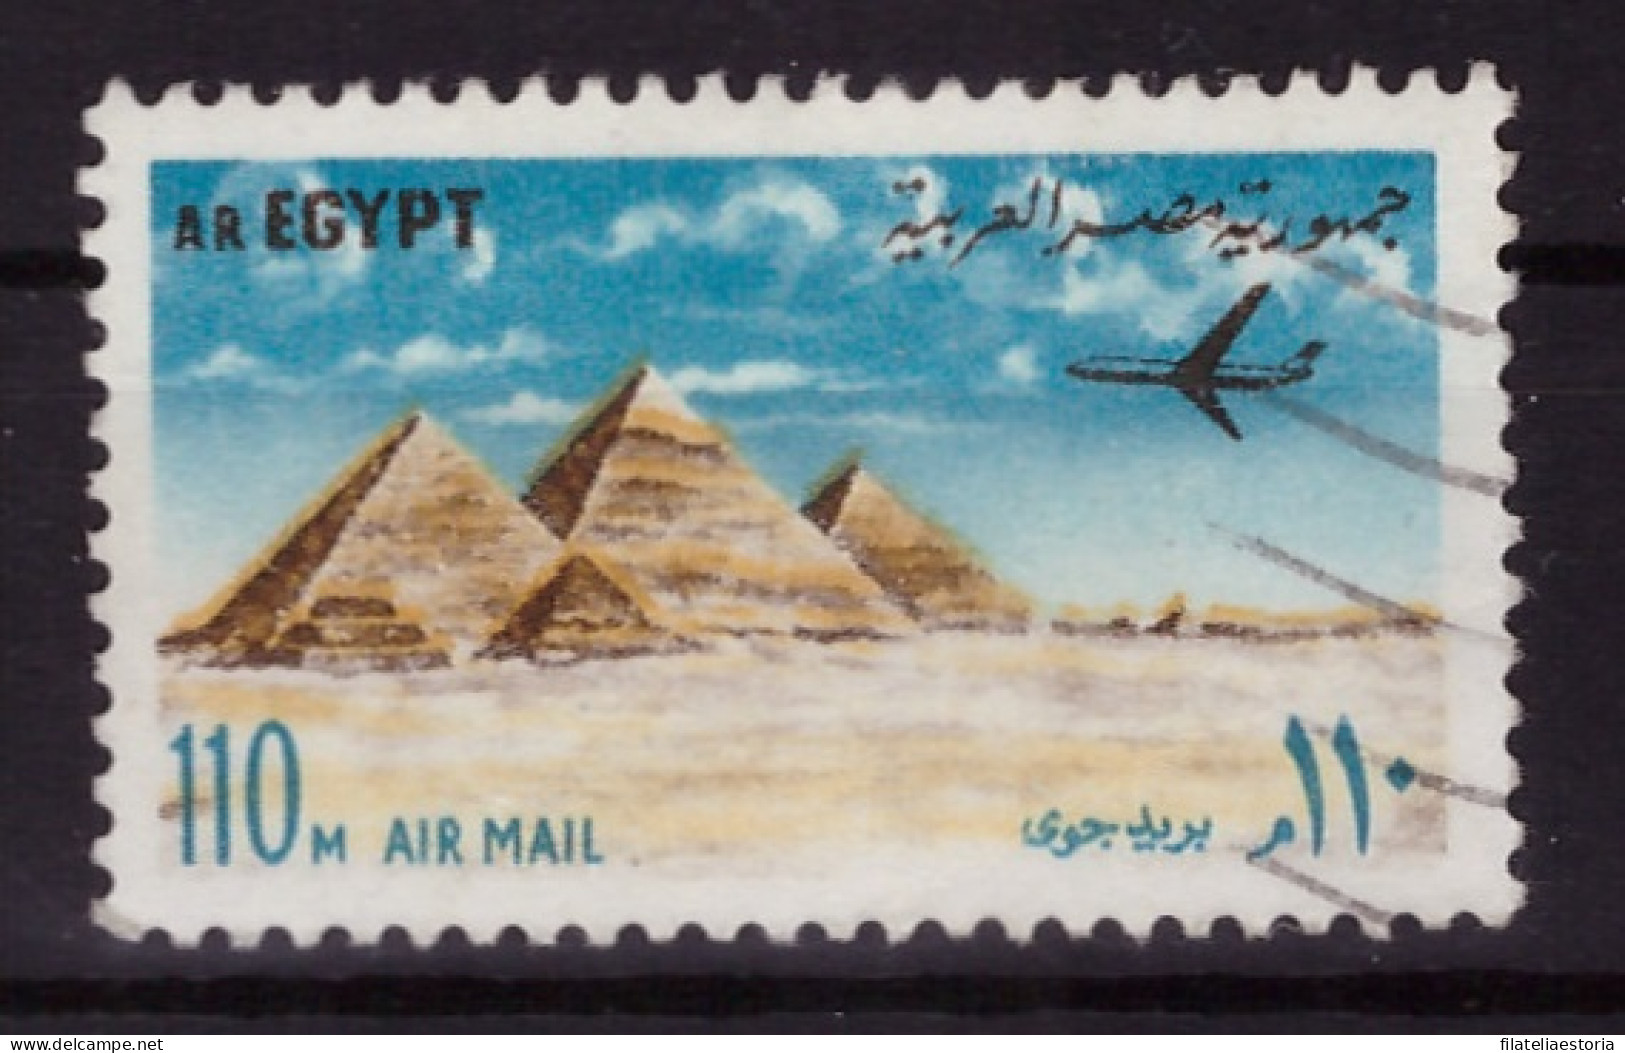 Egypte 1972 - Oblitéré - Monuments - Avions - Michel Nr. 1115 (egy350) - Usados